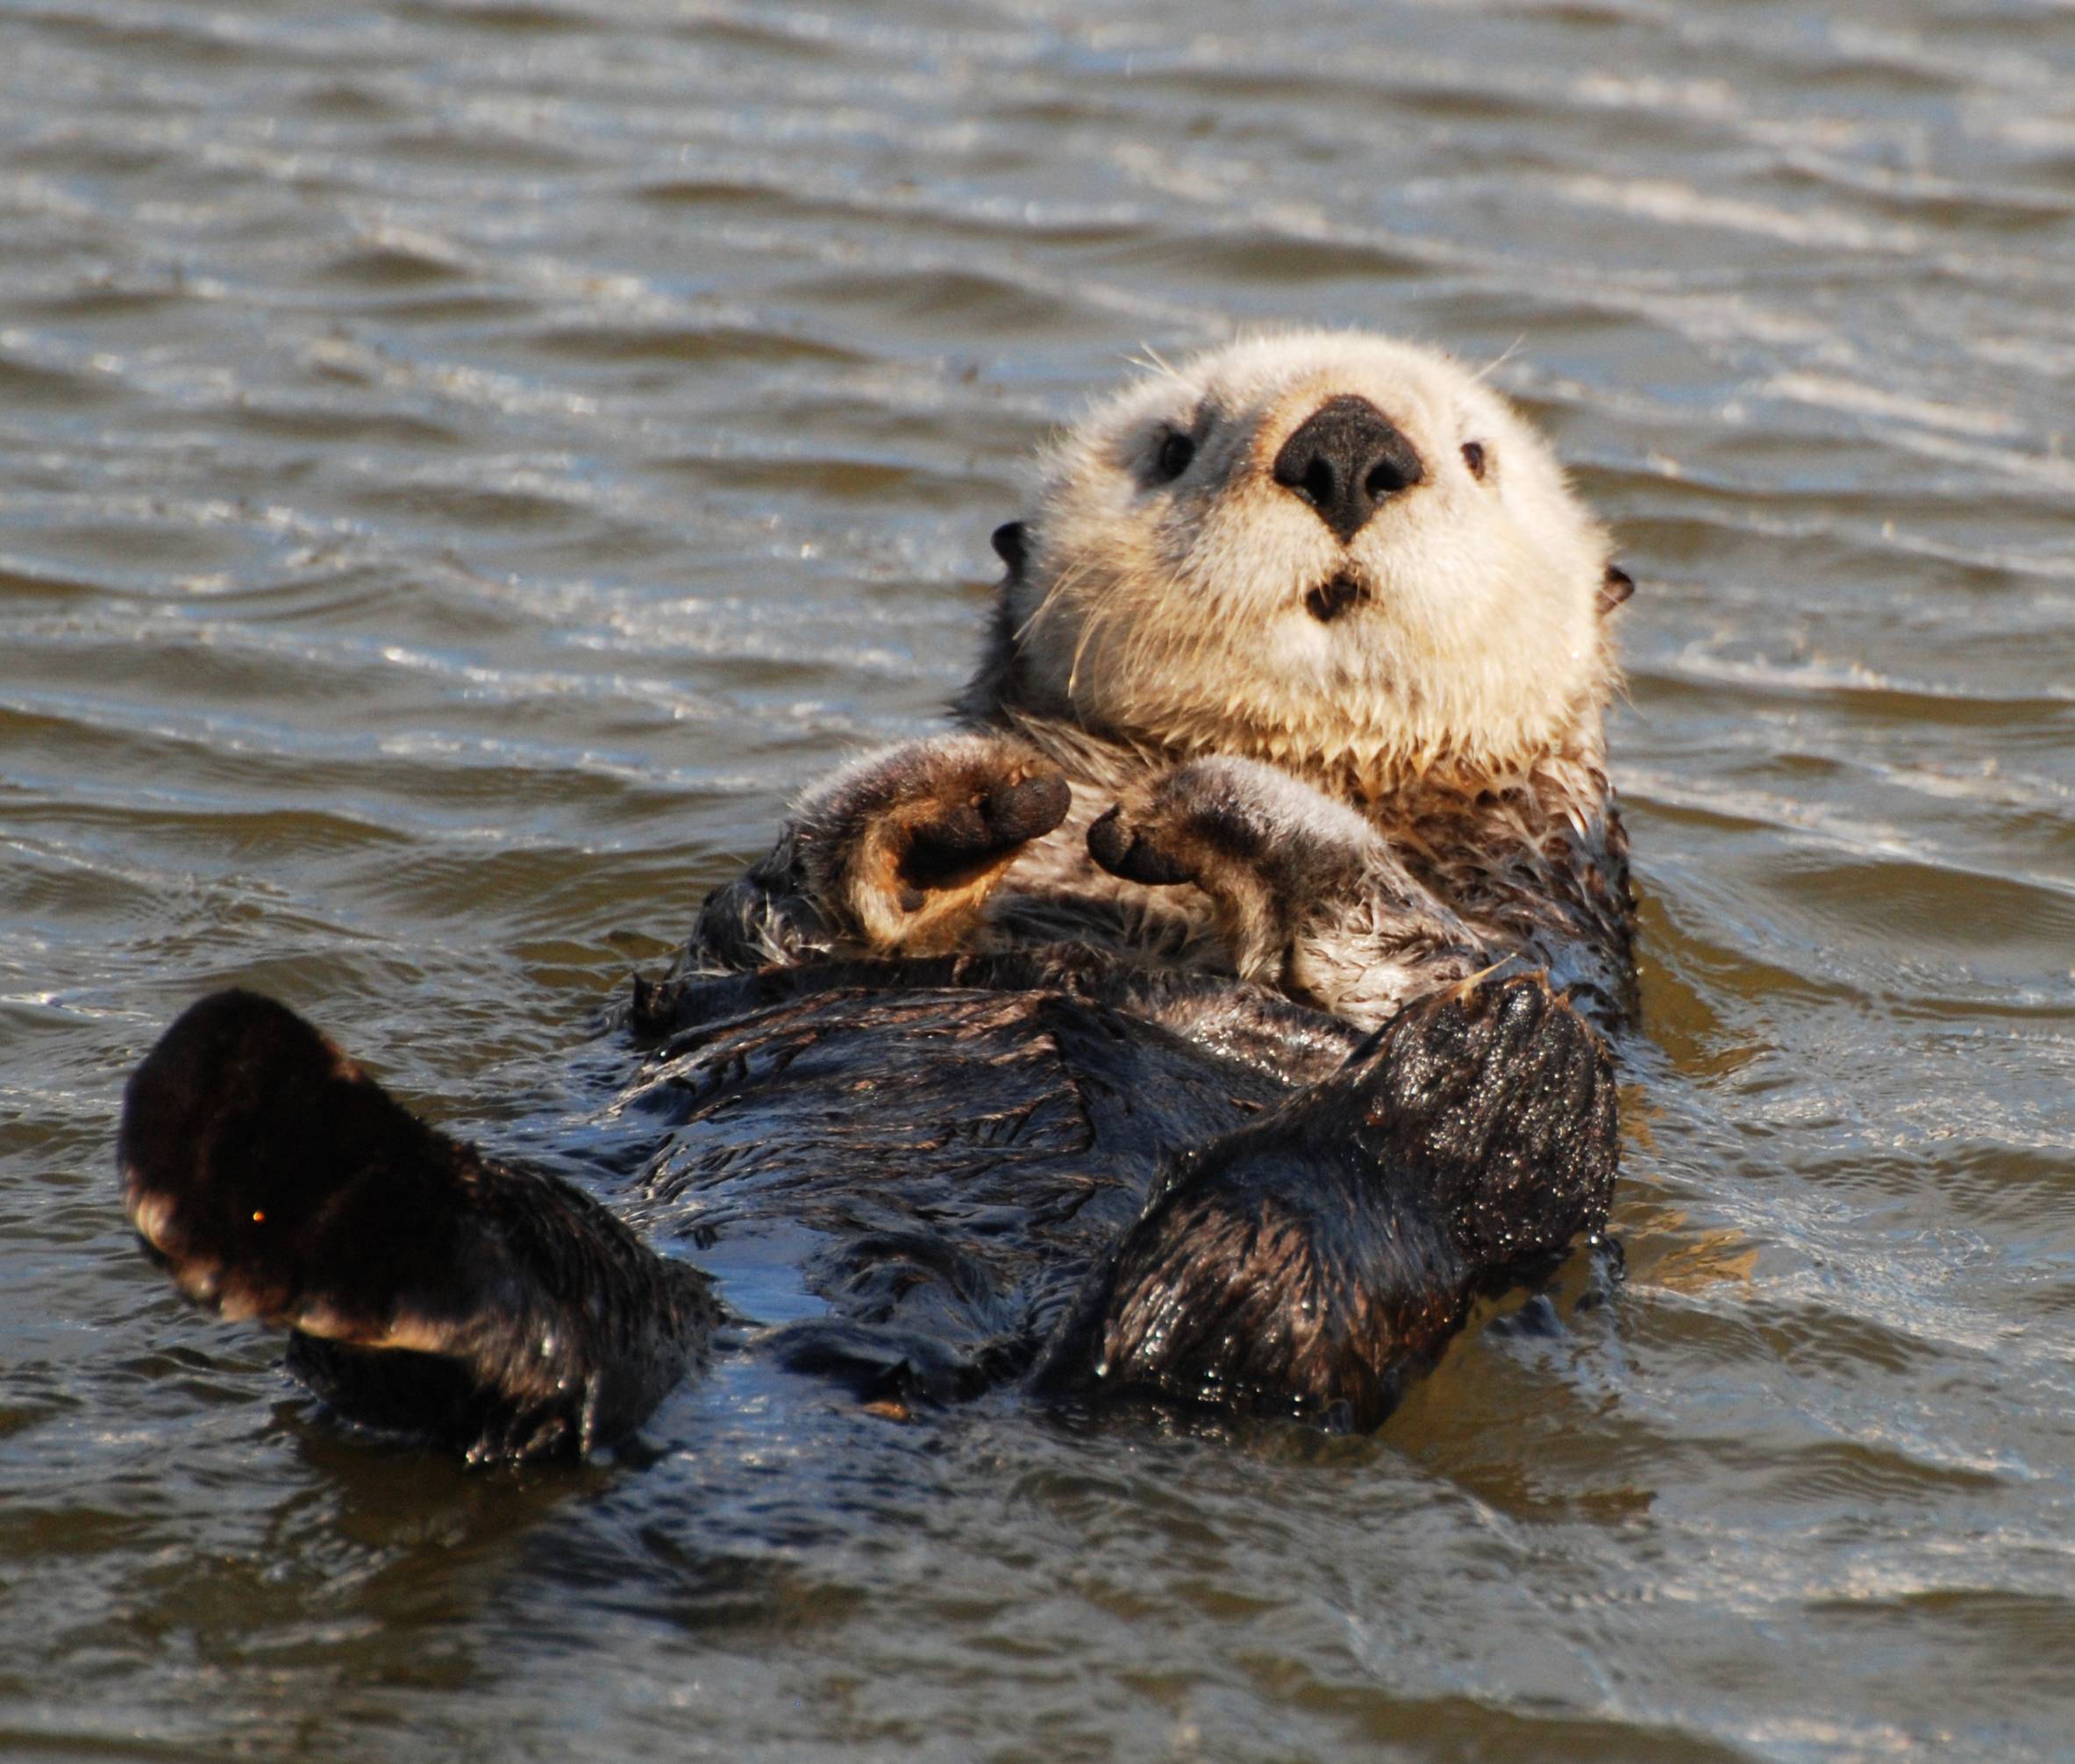 Sea otter Image & Wallpaper on Jeweell